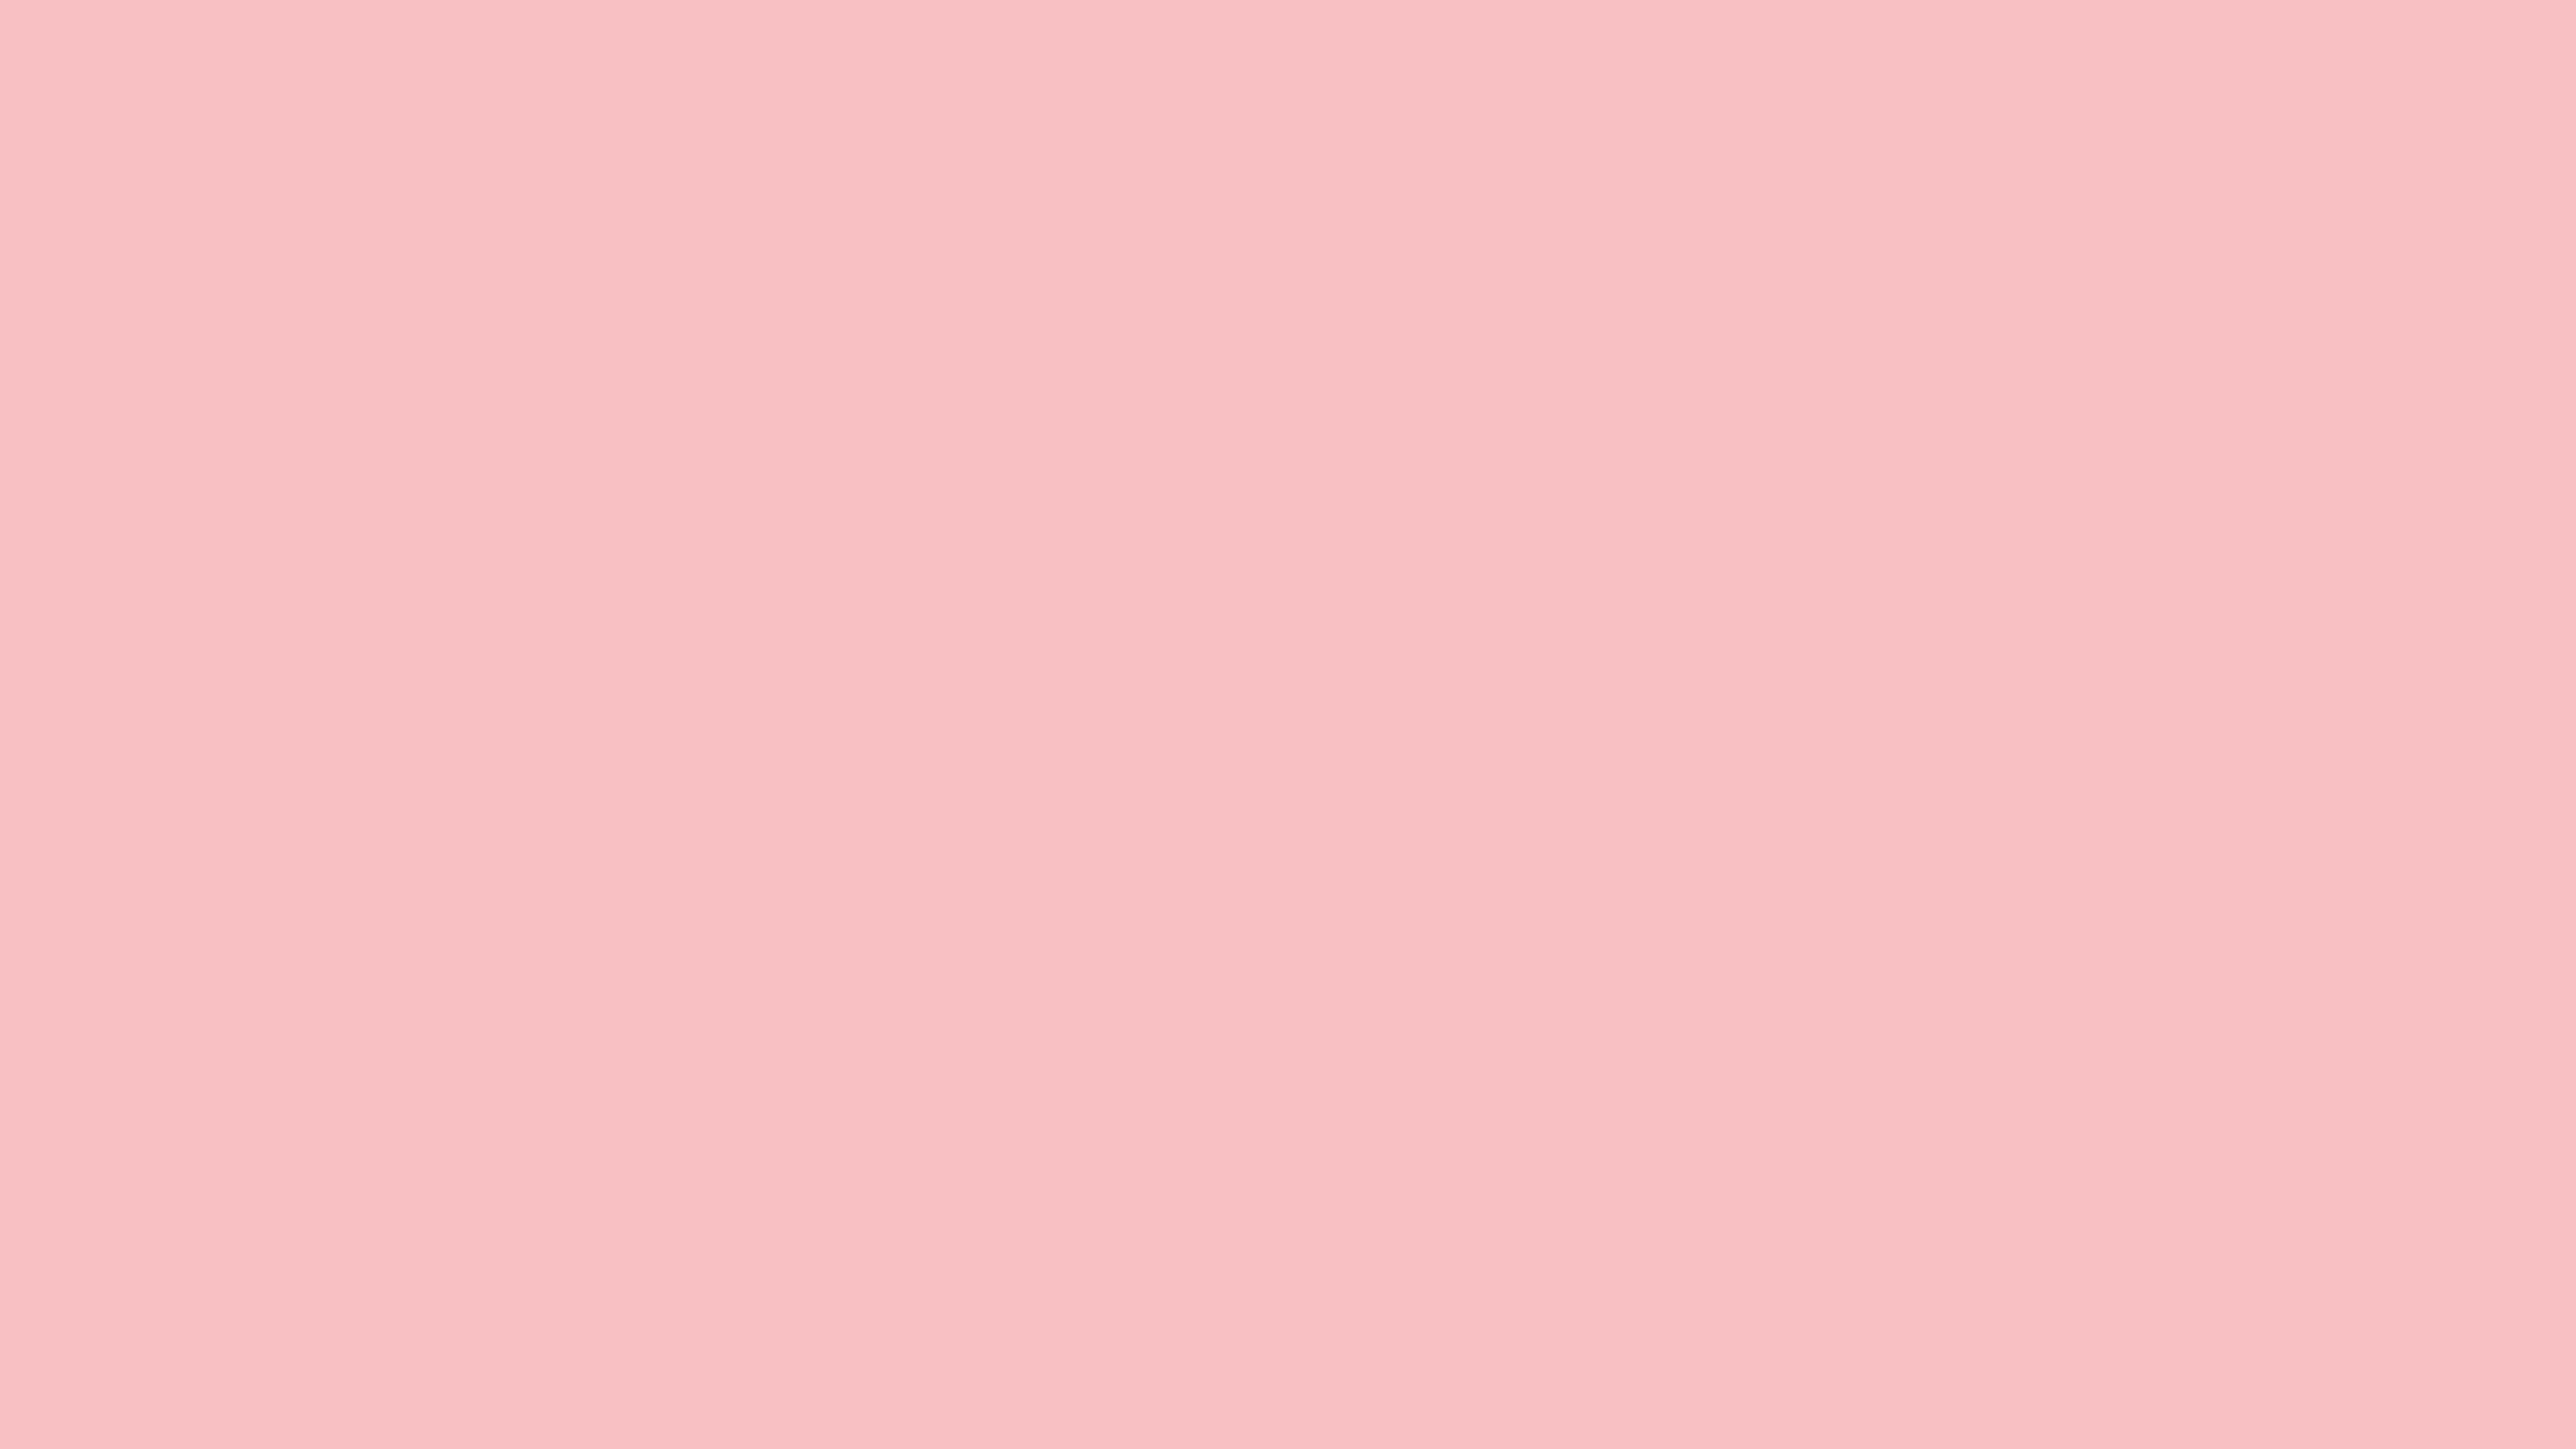 Azalea Pink Solid Color Background Image | Free Image Generator